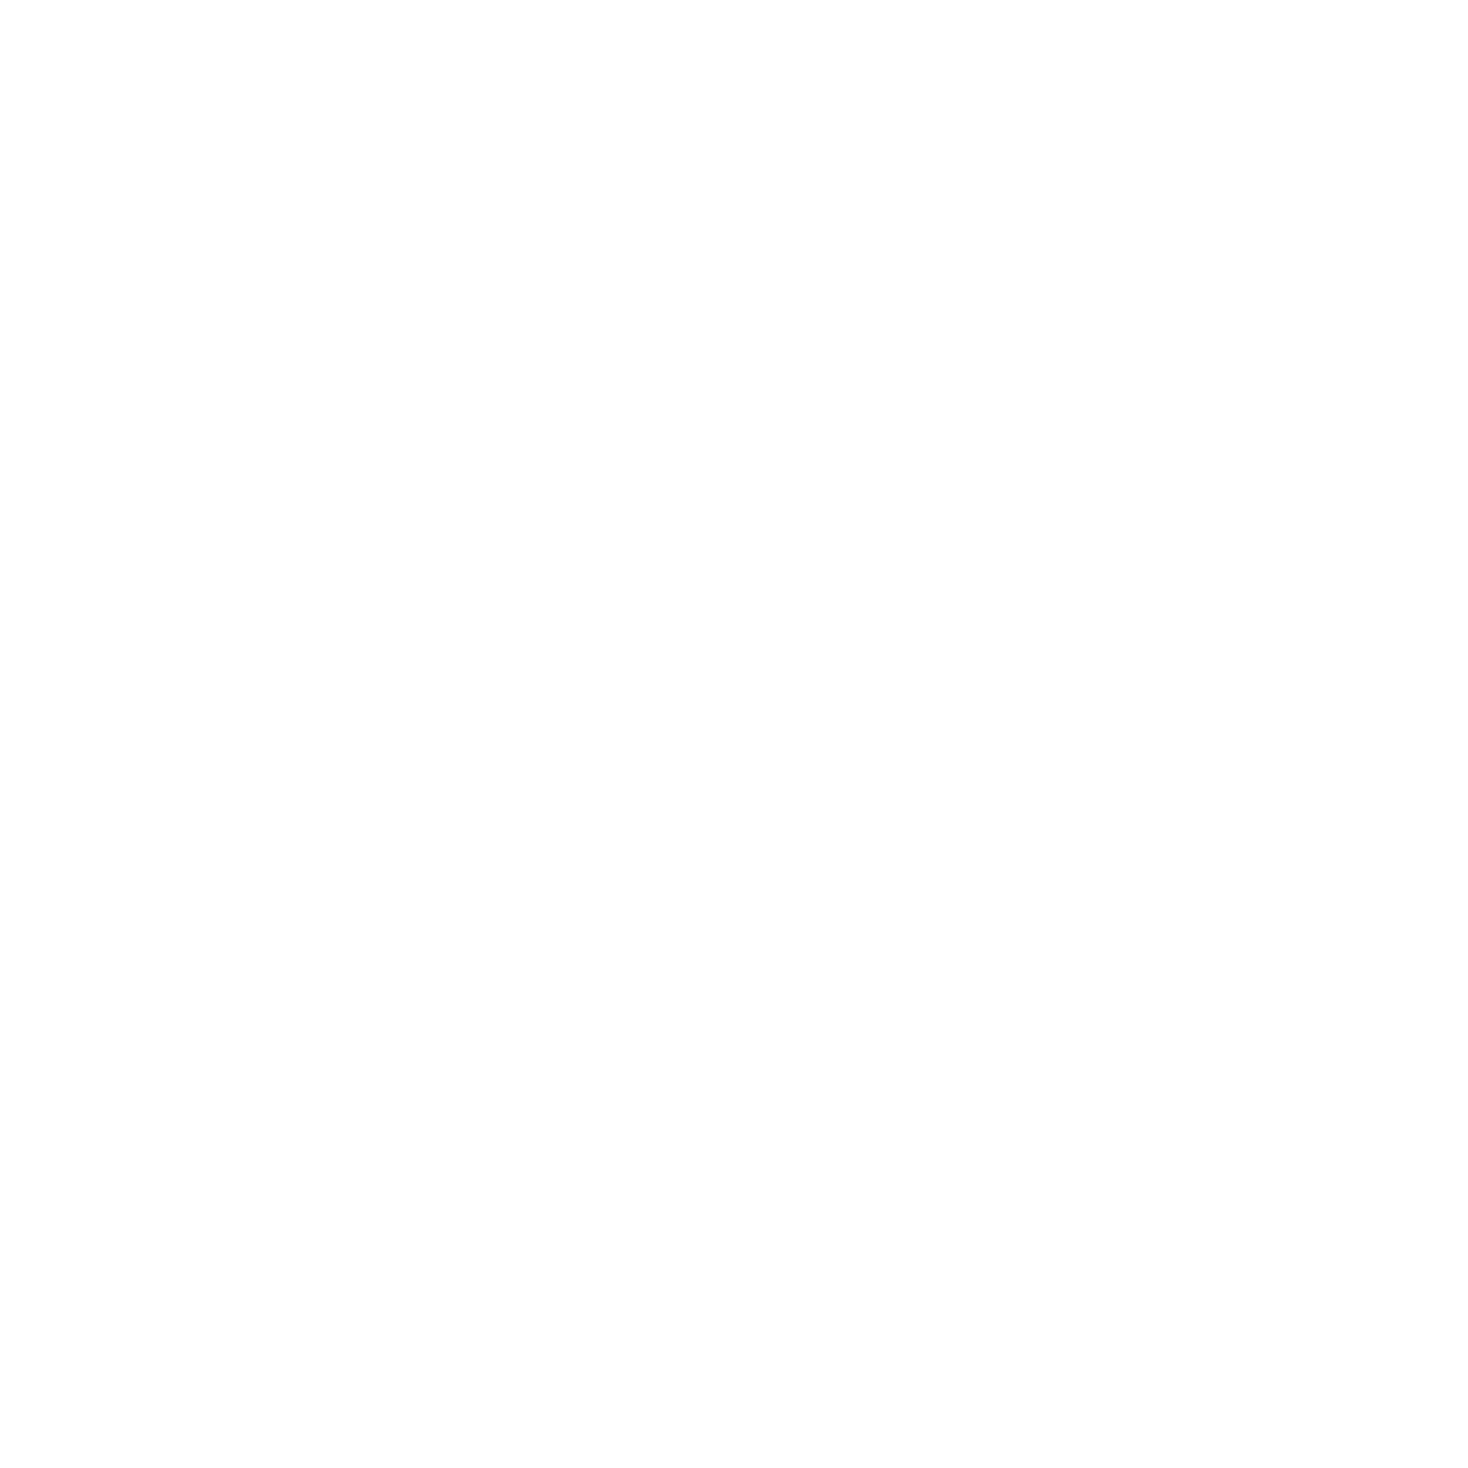 Obayashi logo pour fonds sombres (PNG transparent)